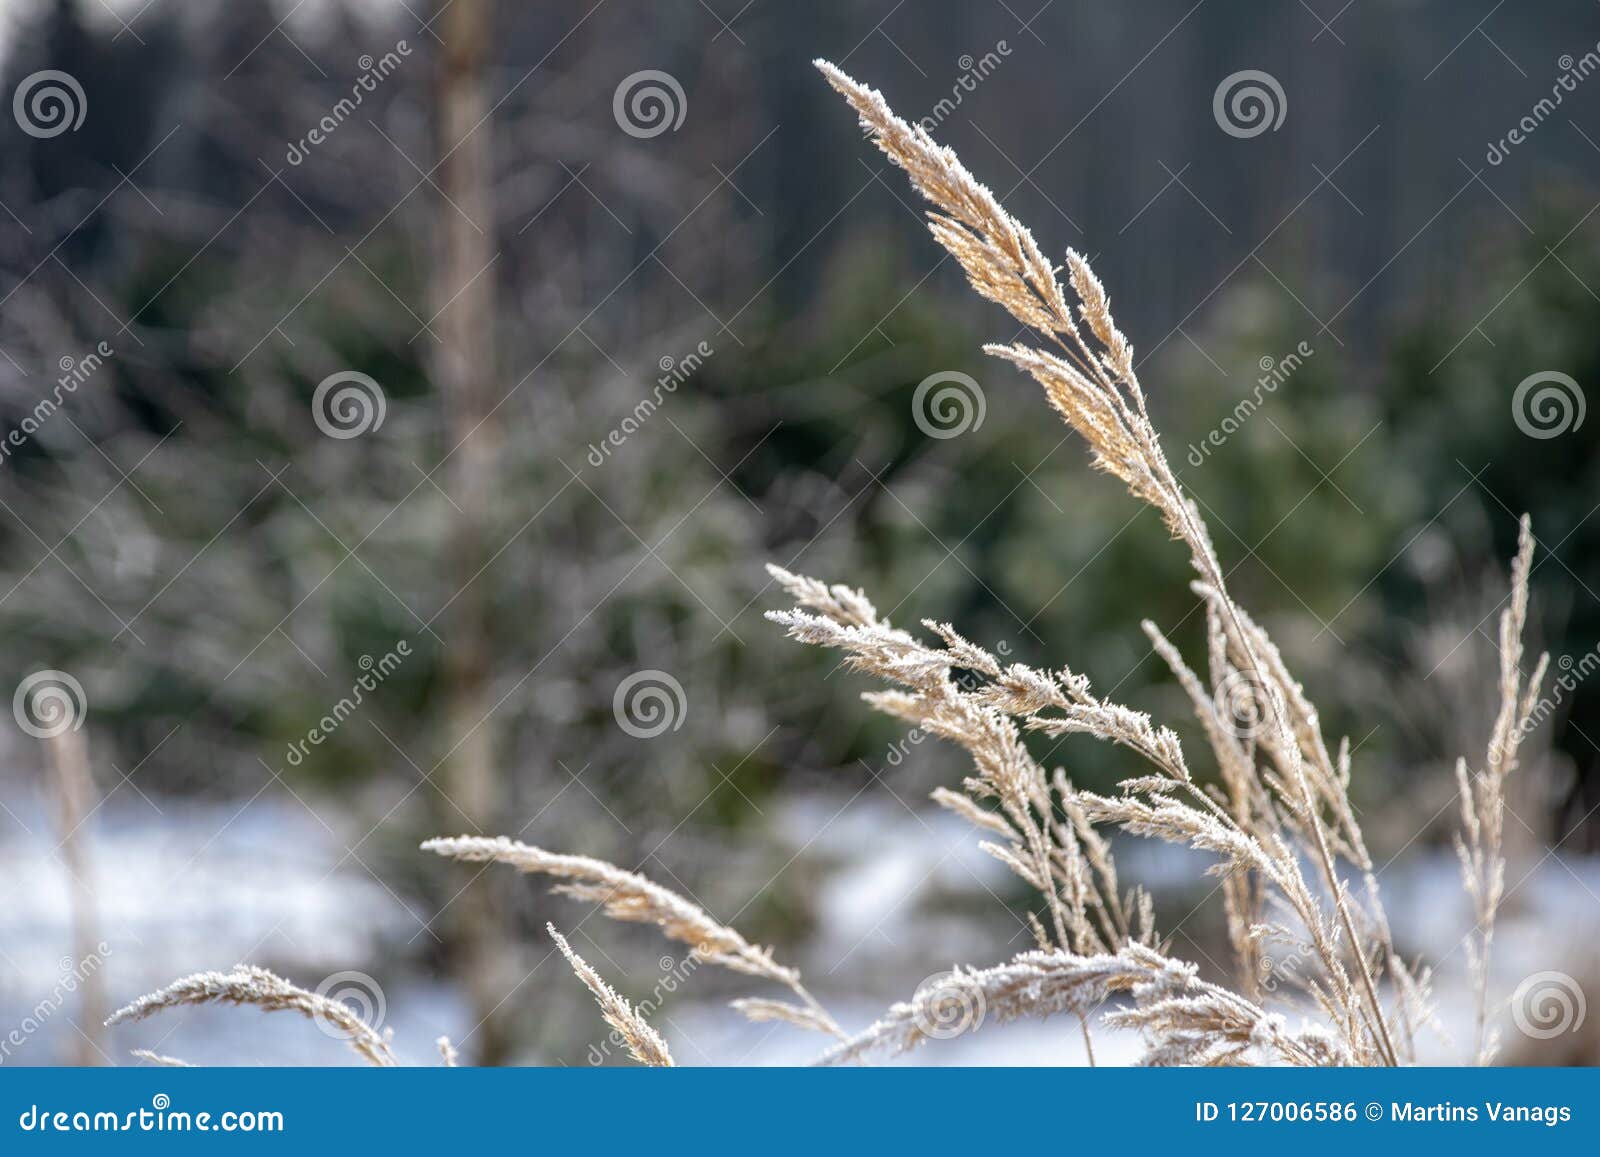 Frozen Vegetation in Winter on Blur Background Stock Photo - Image of ...